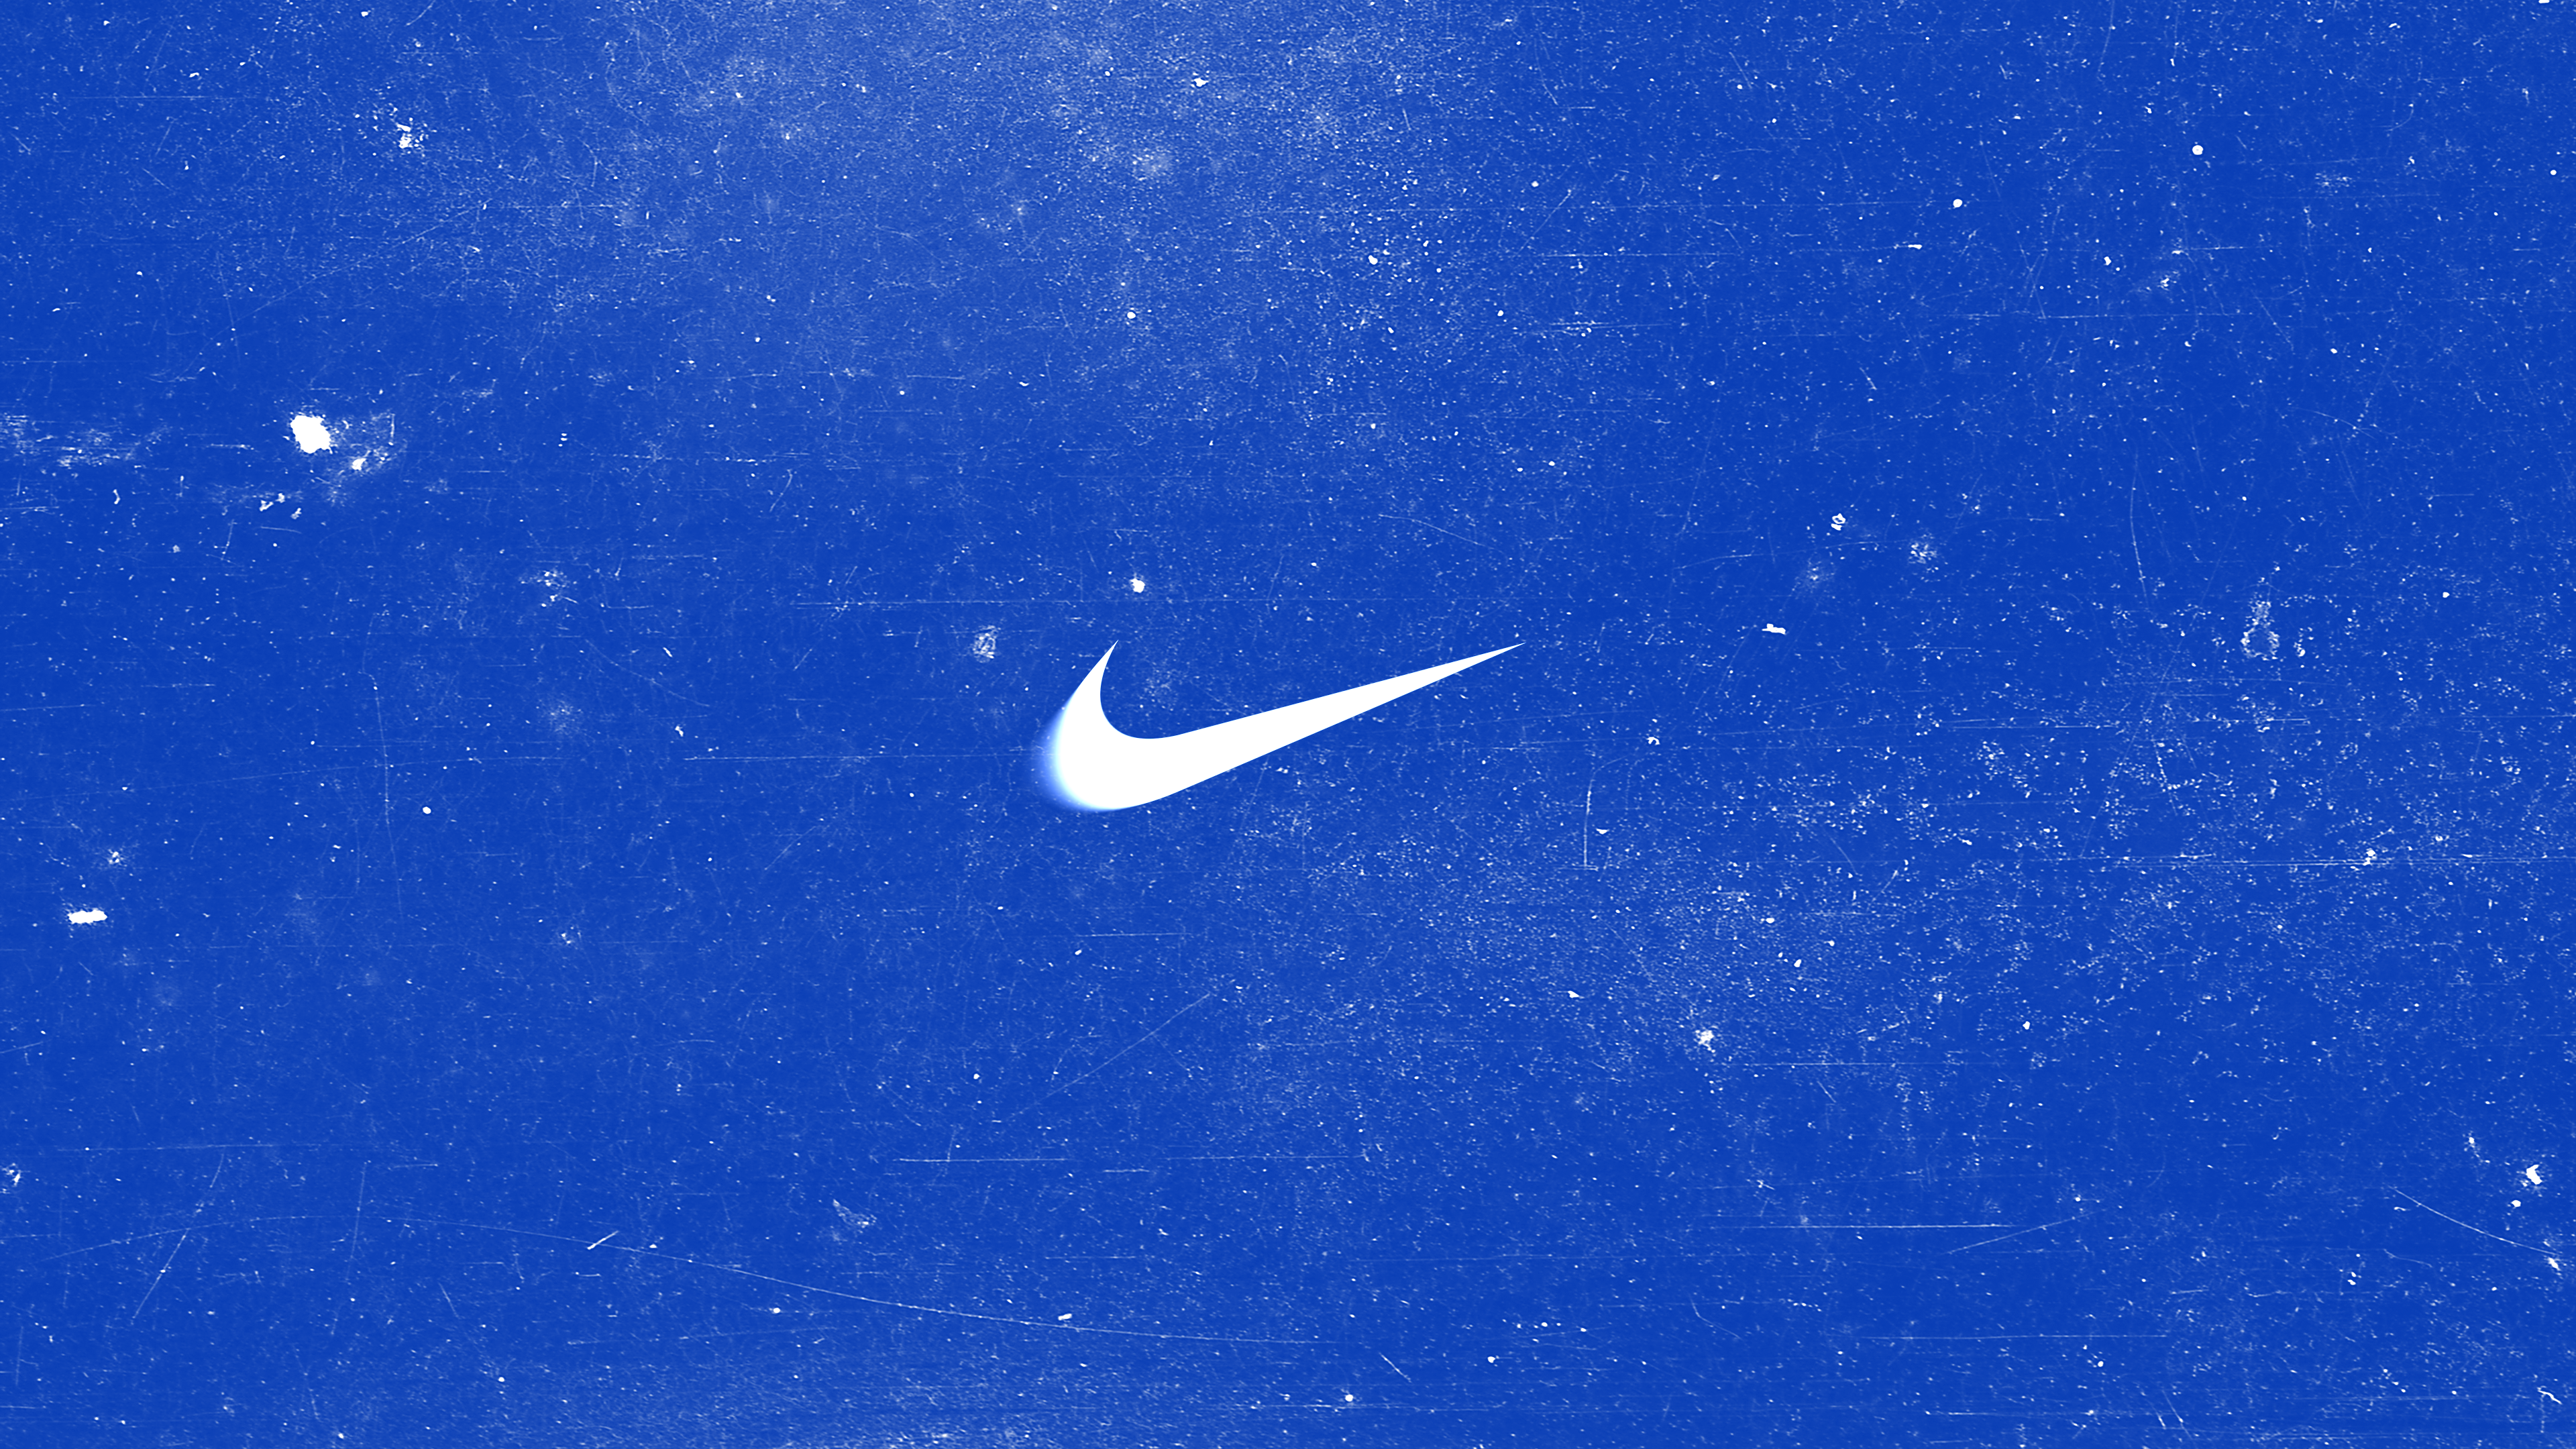 General 3840x2160 Nike simple background blue background grunge film grain wall 4K texture minimalism logo brand